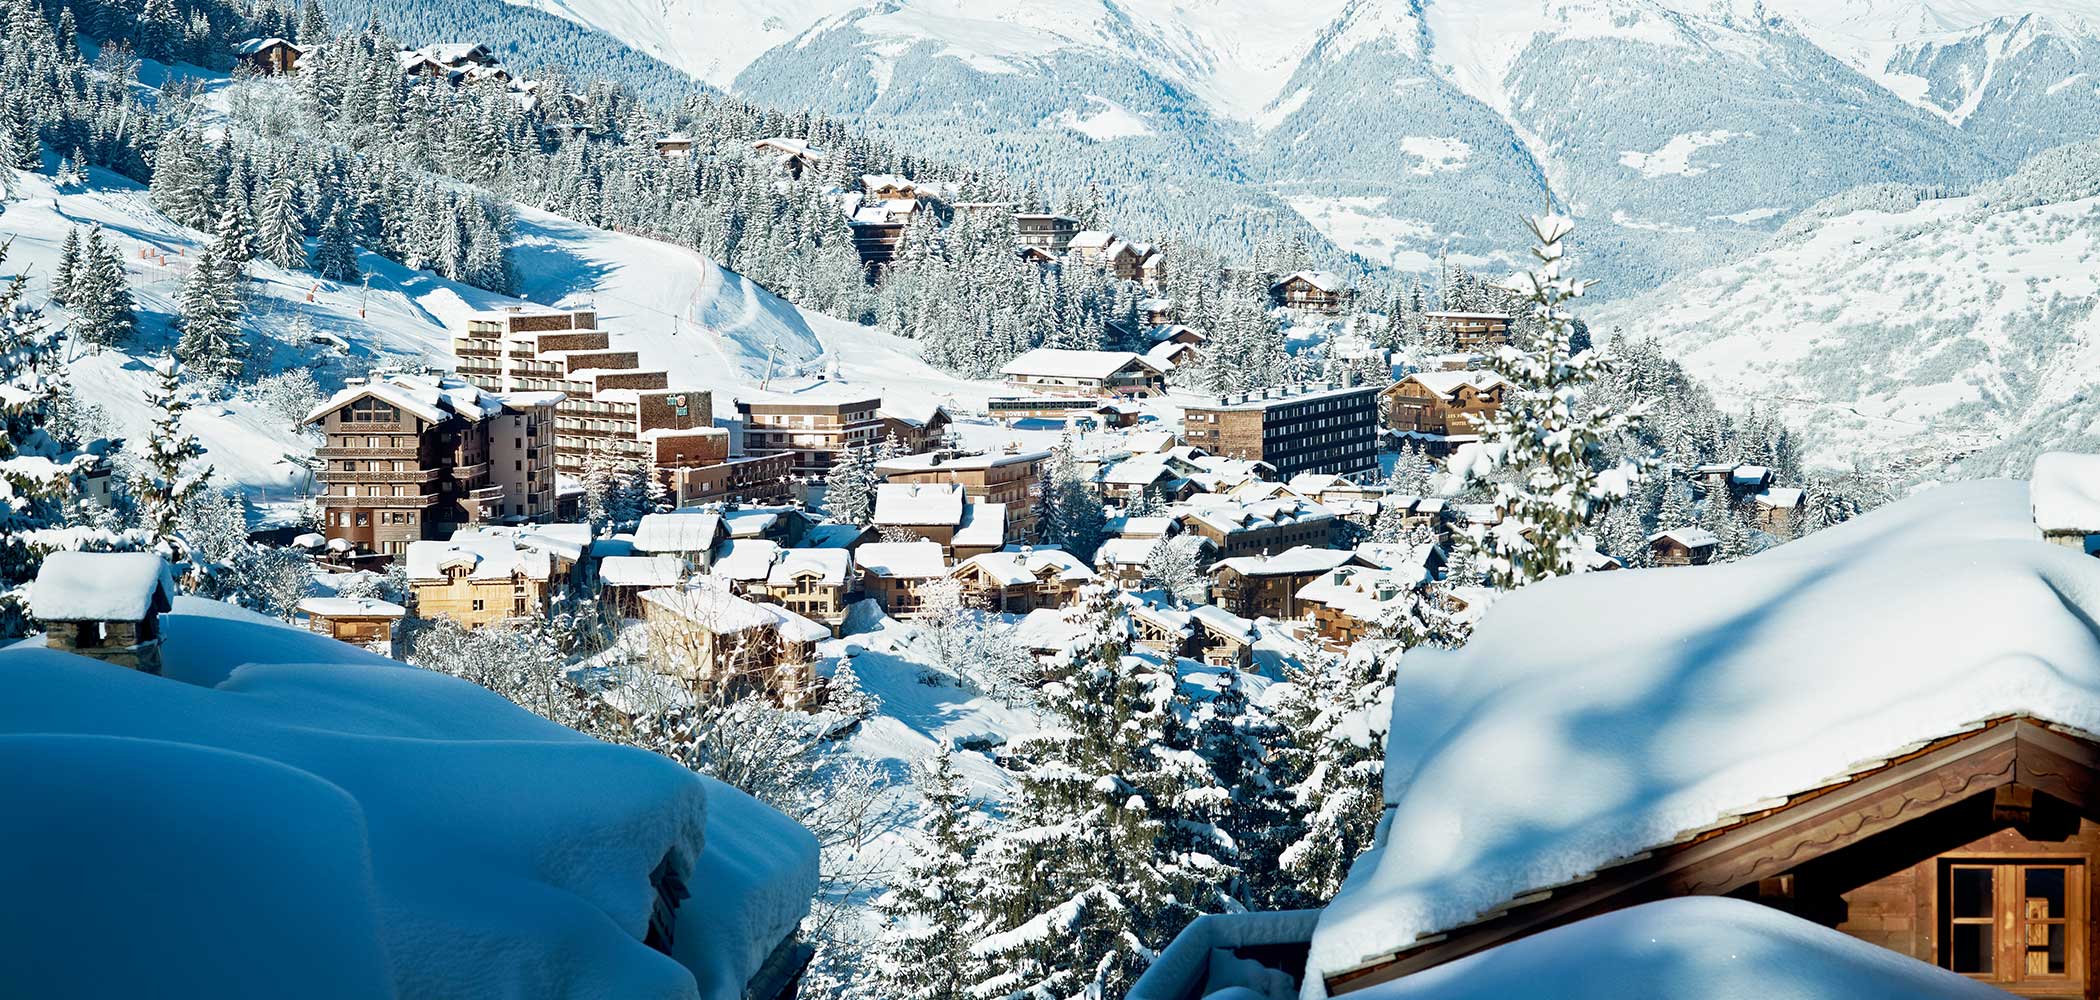 5c127993b83cf_courchevel-village-carre-blanc-roxim-vacances-ski